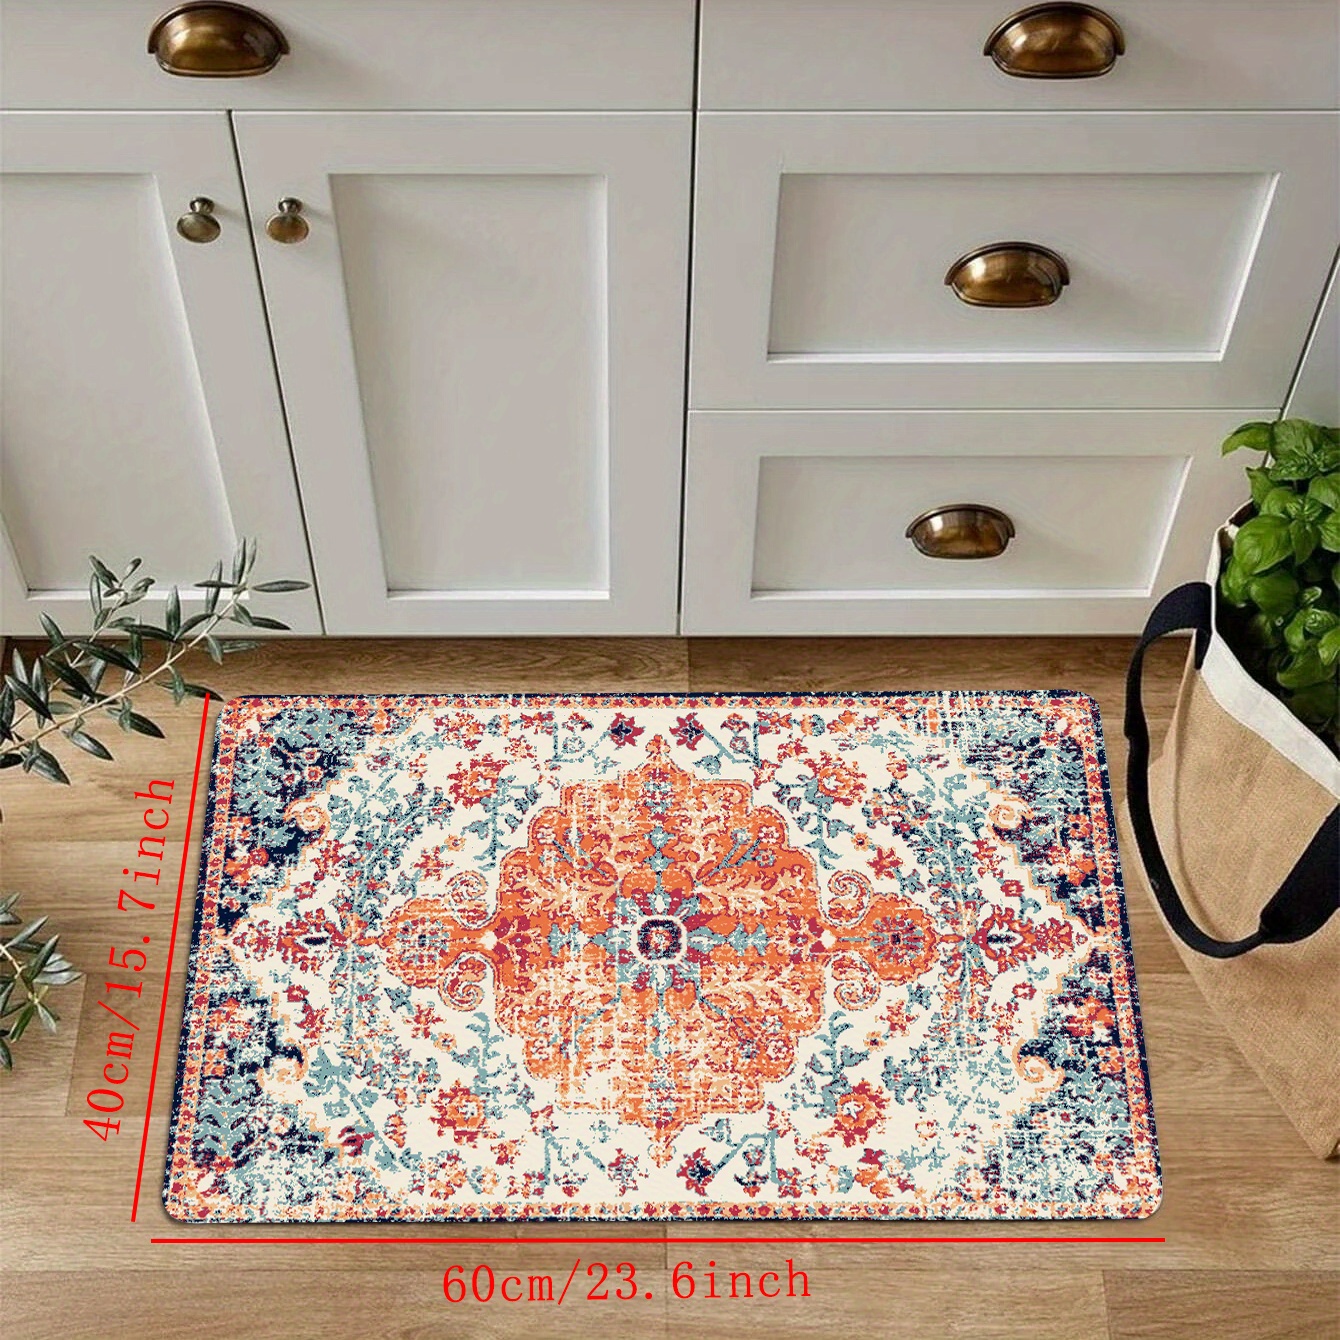 World Carpet Vintage Tile Anti-Fatigue Kitchen Floor Mat